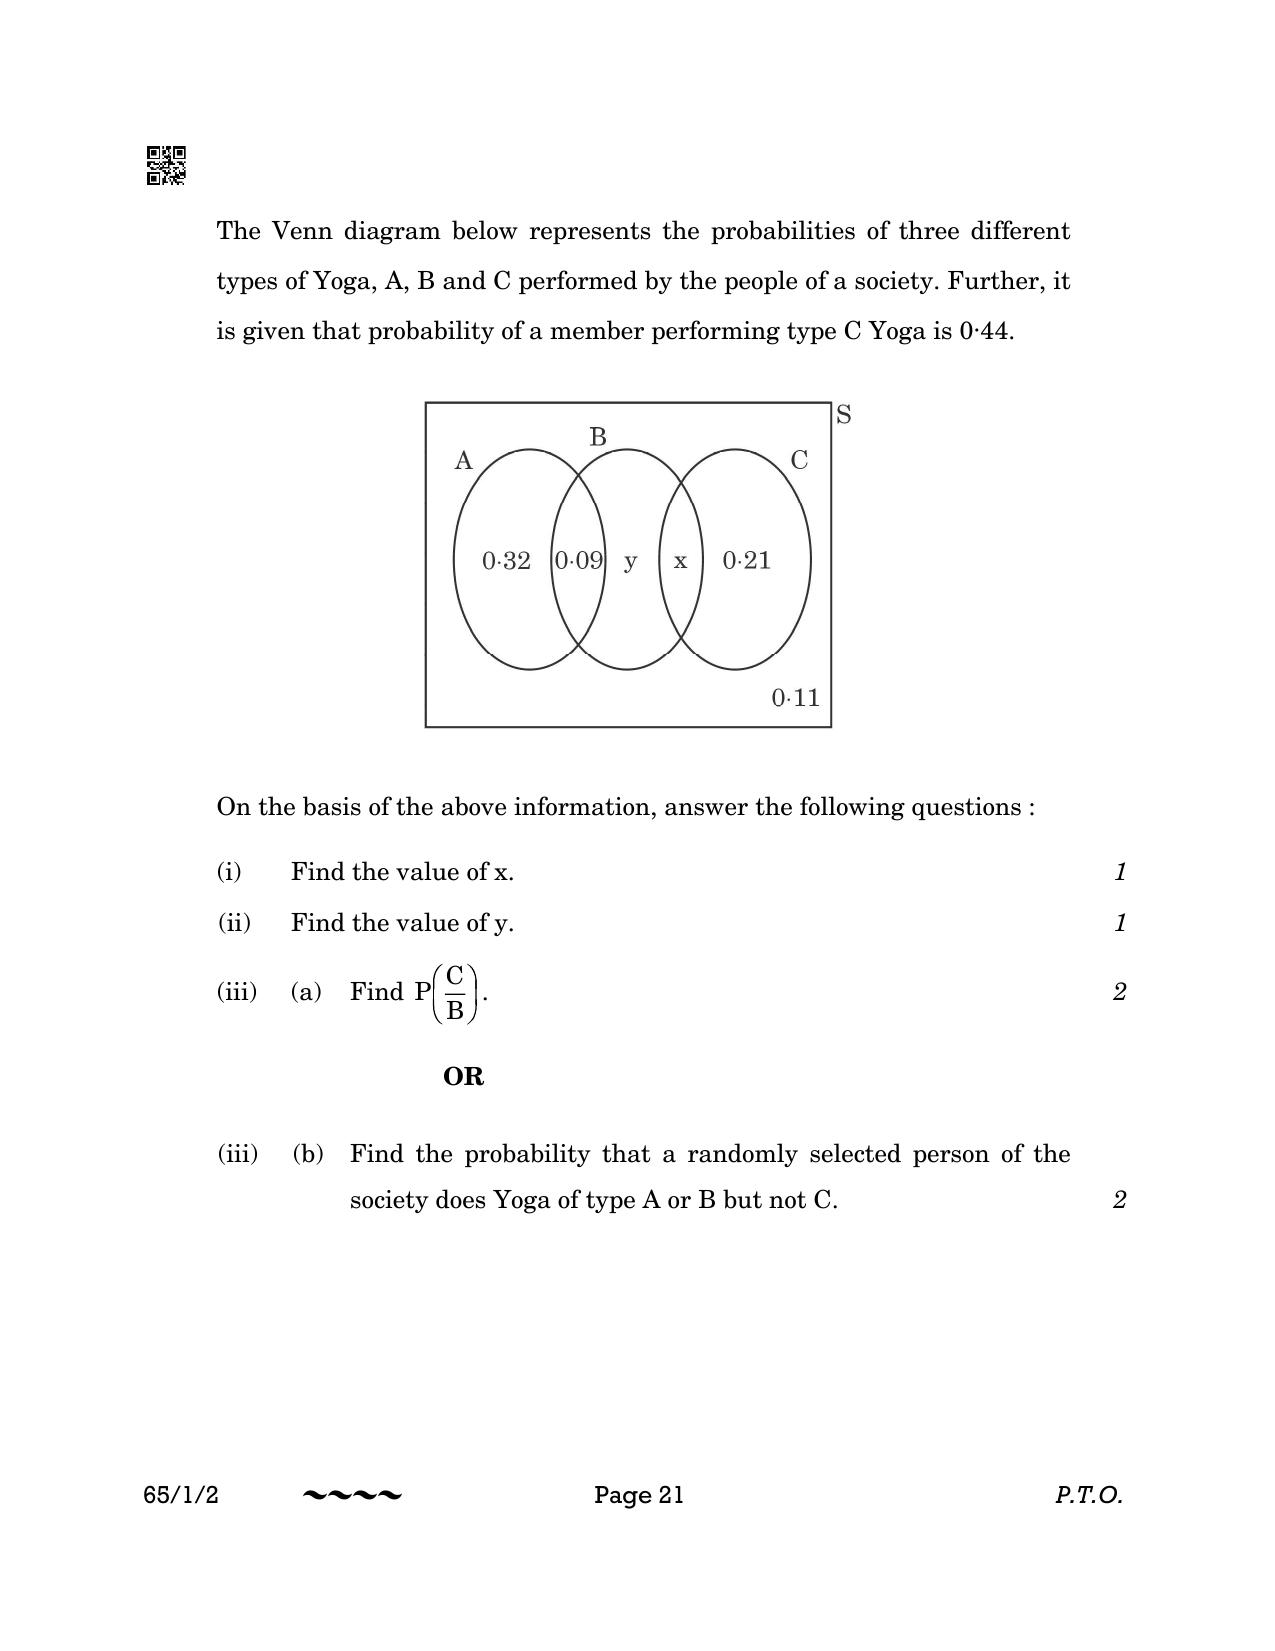 CBSE Class 12 65-1-2 MATHEMATICS 2023 Question Paper - Page 21